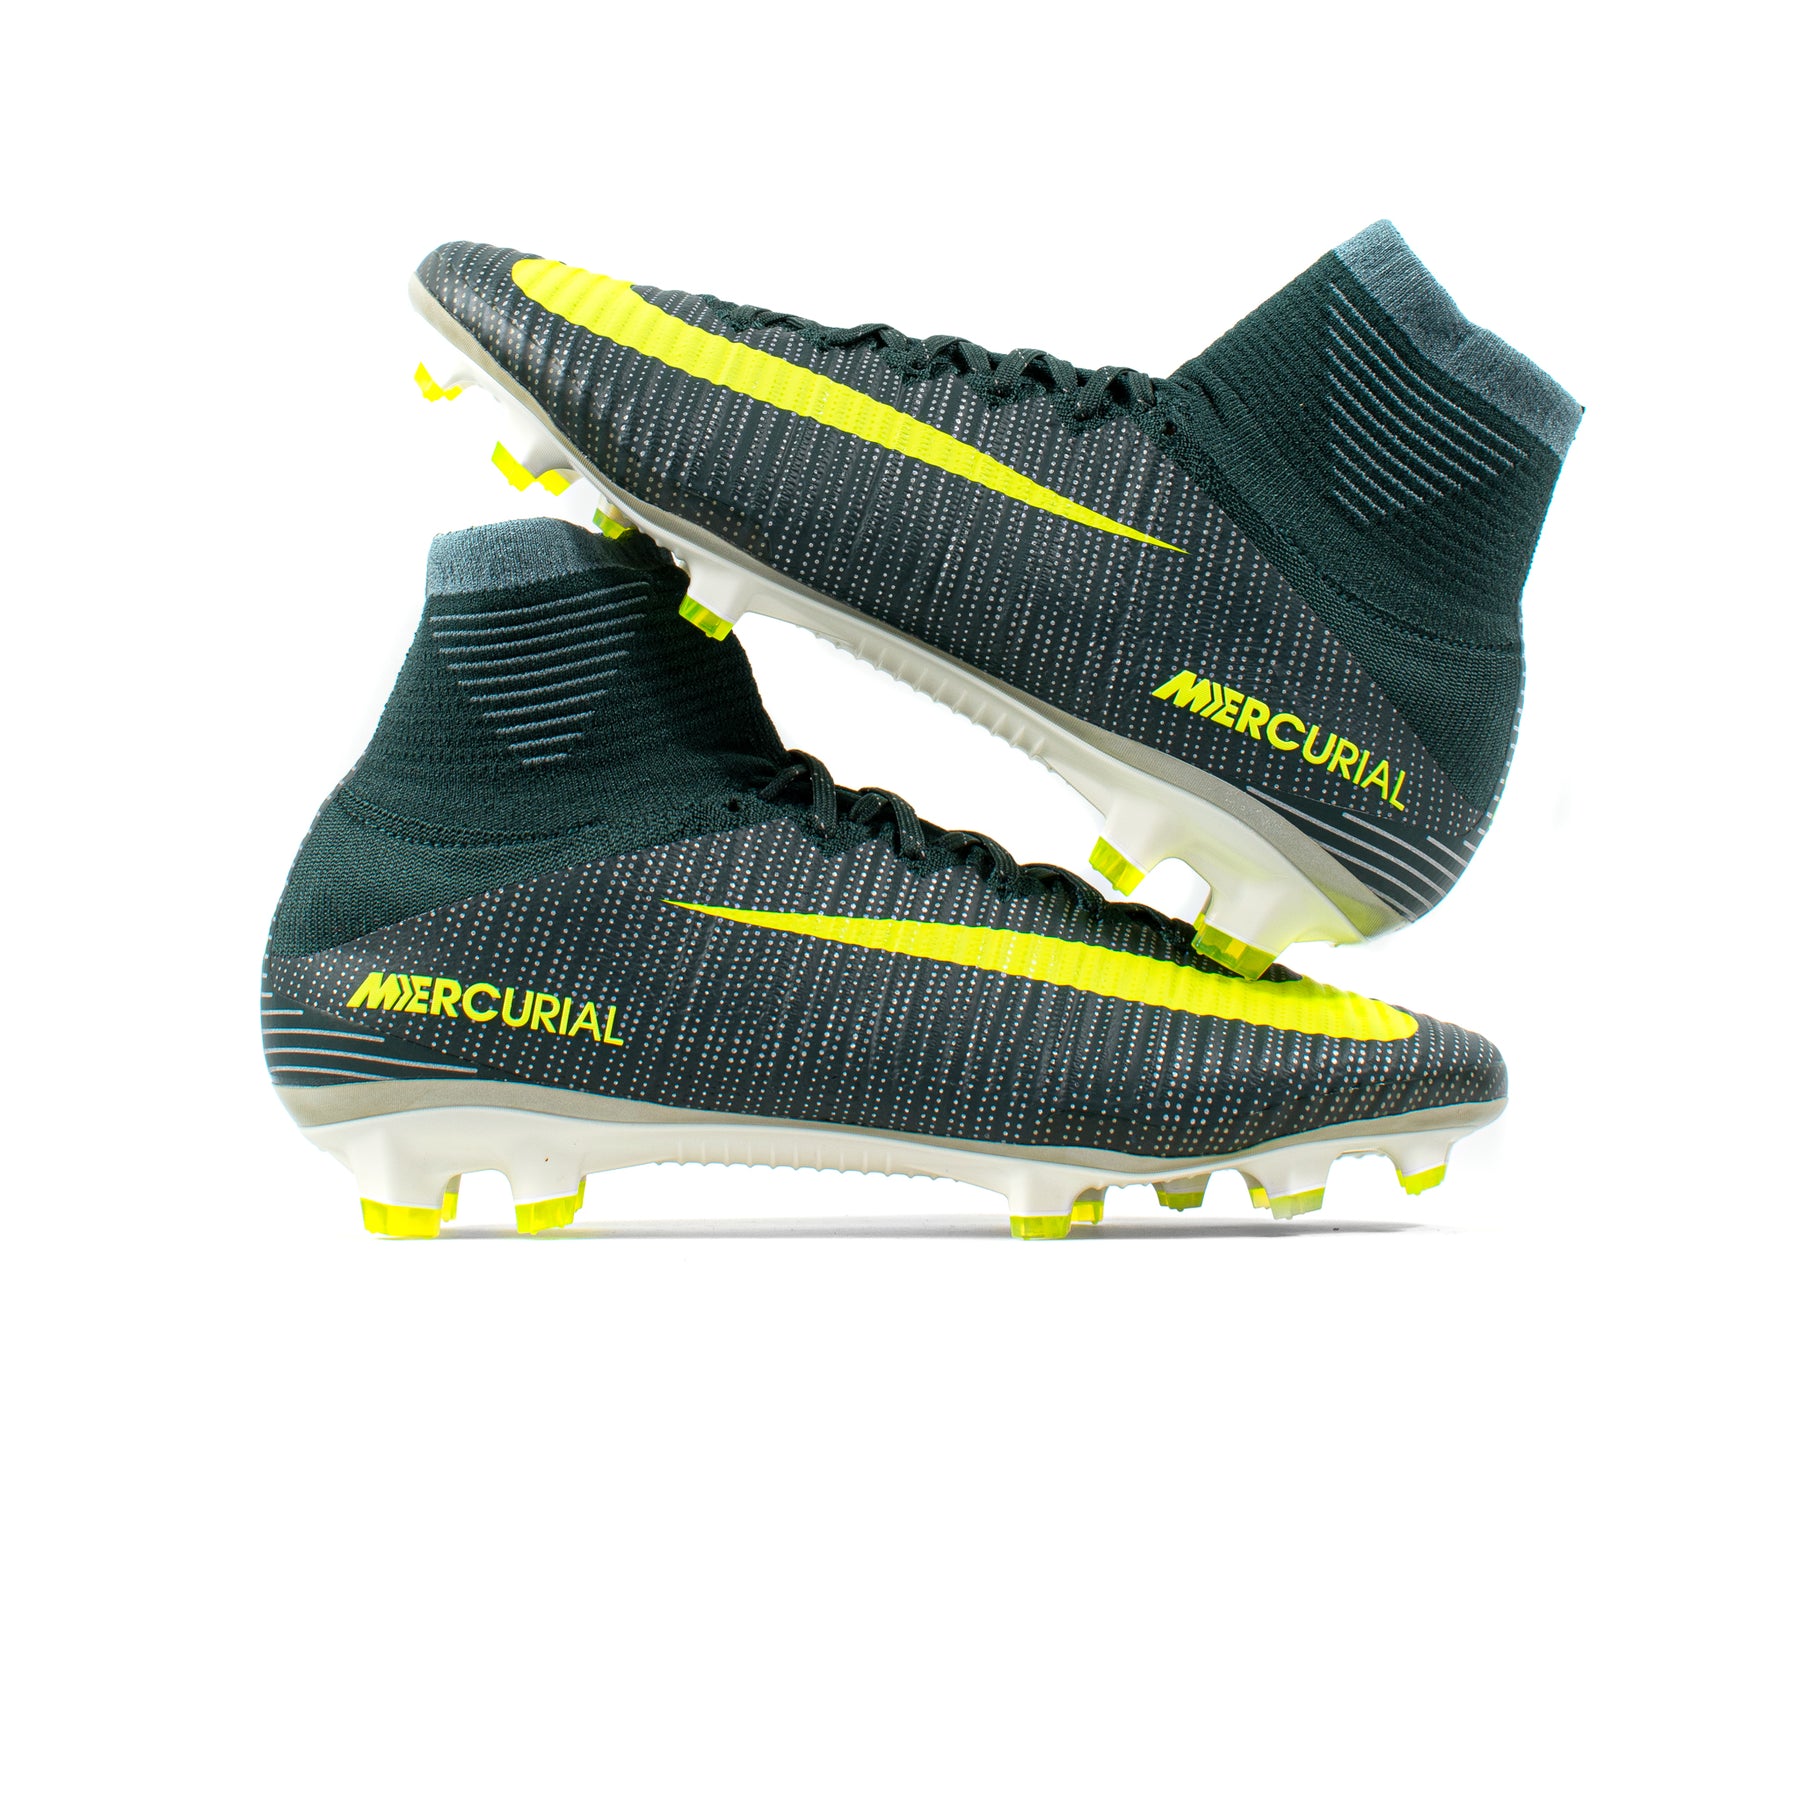 Nike Mercurial Vapor Superfly V CR7 Black Yellow FG – Soccer